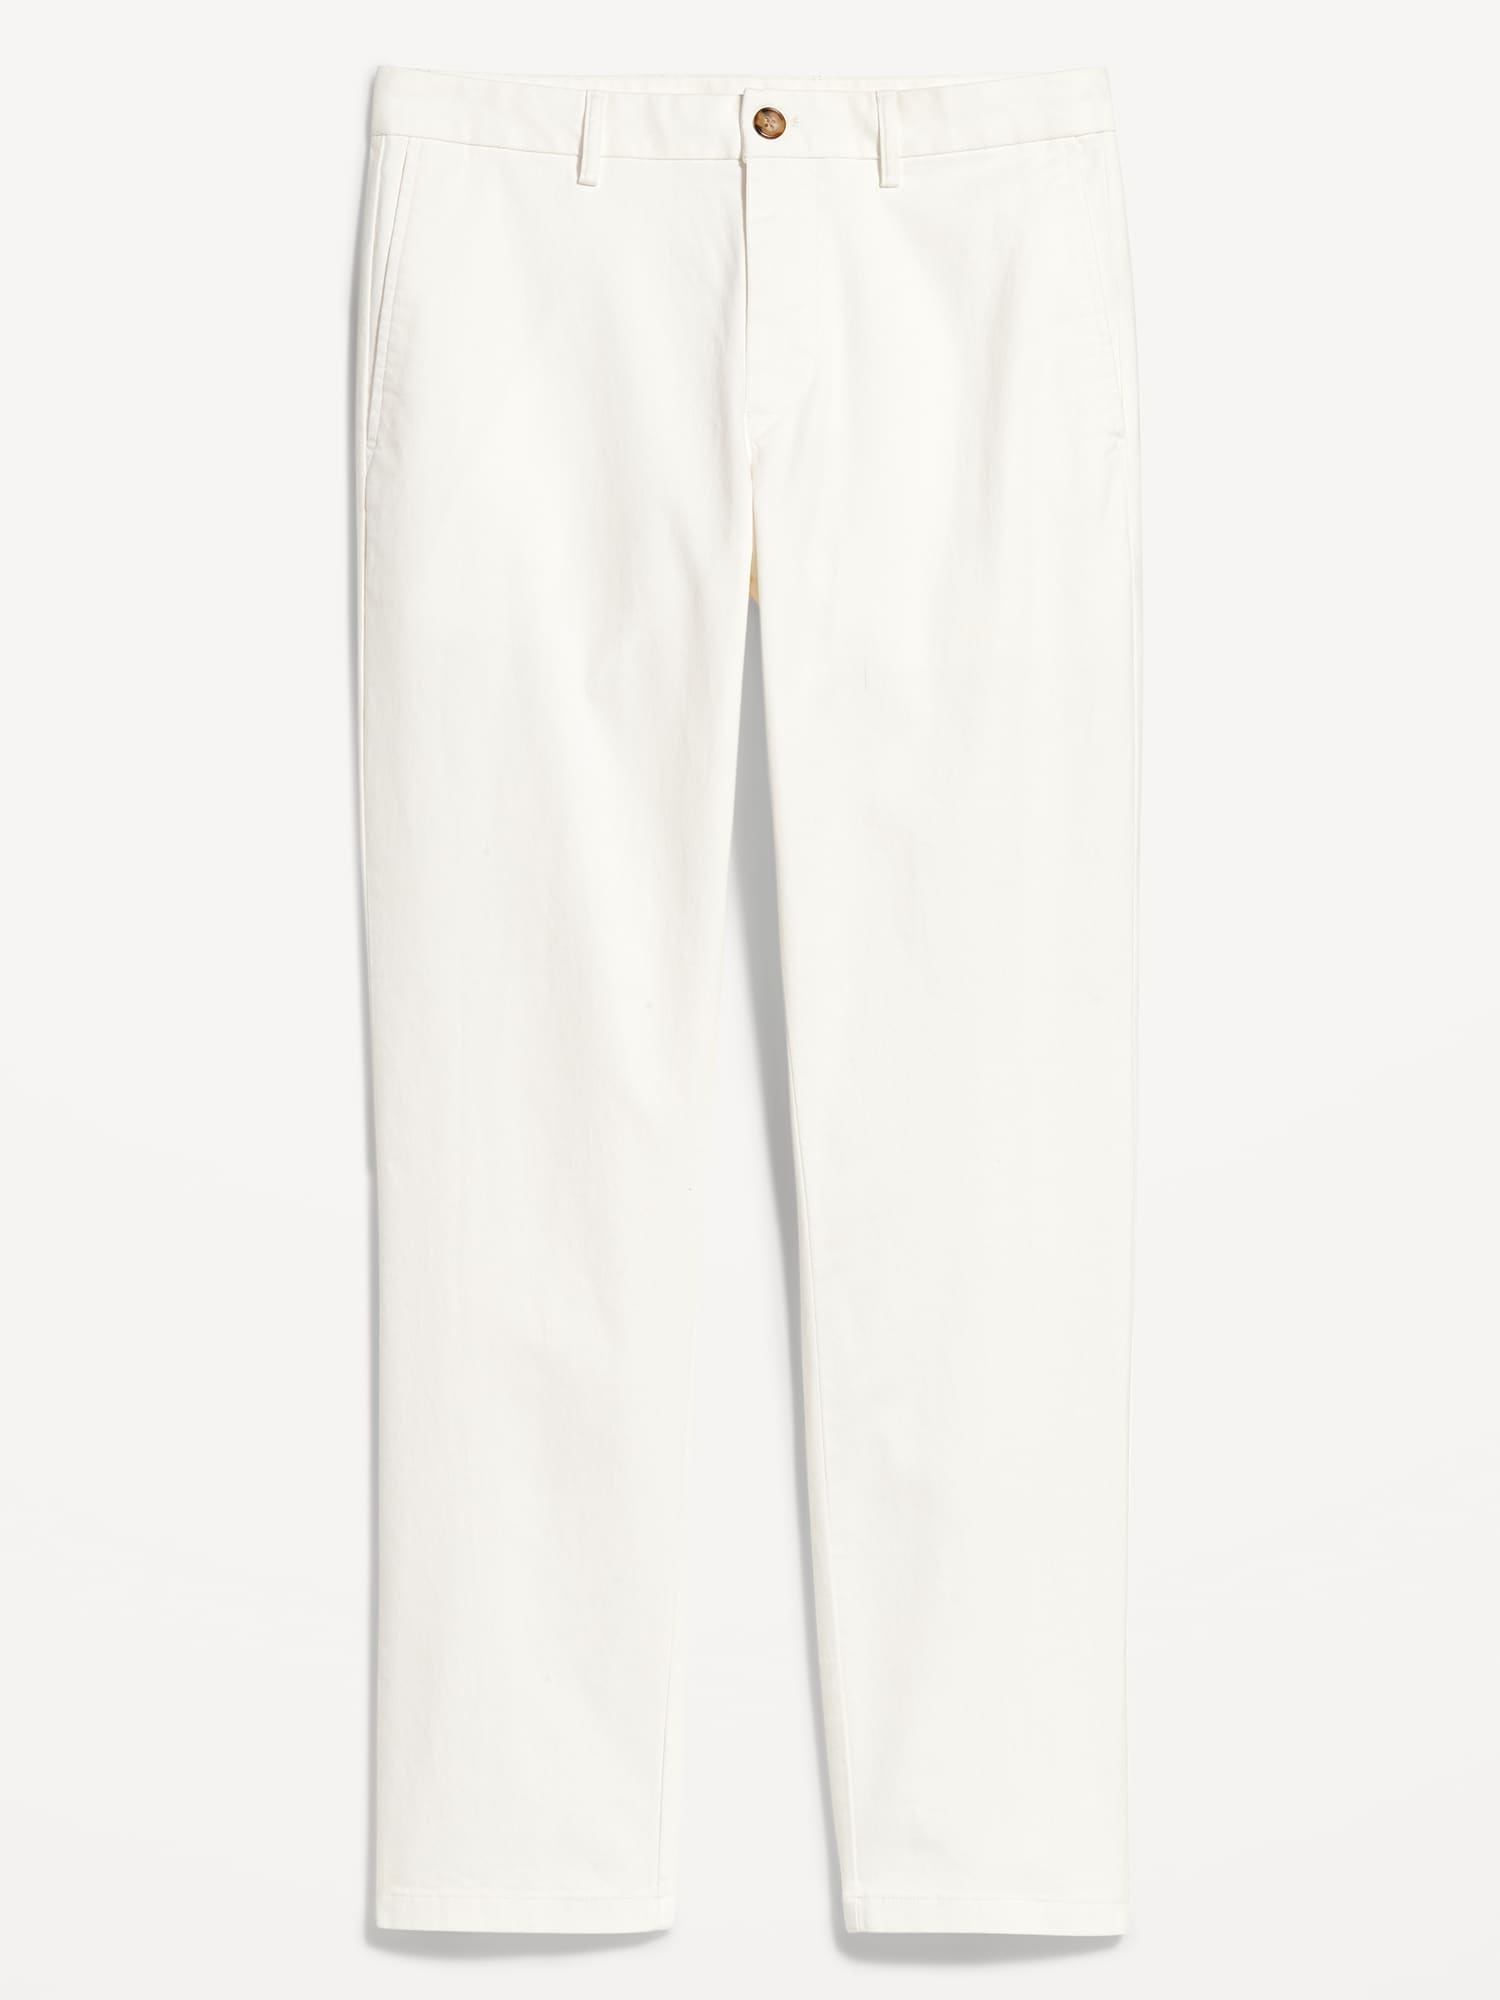 Slim Built-In Flex Rotation Chino Pants for Men | Old Navy